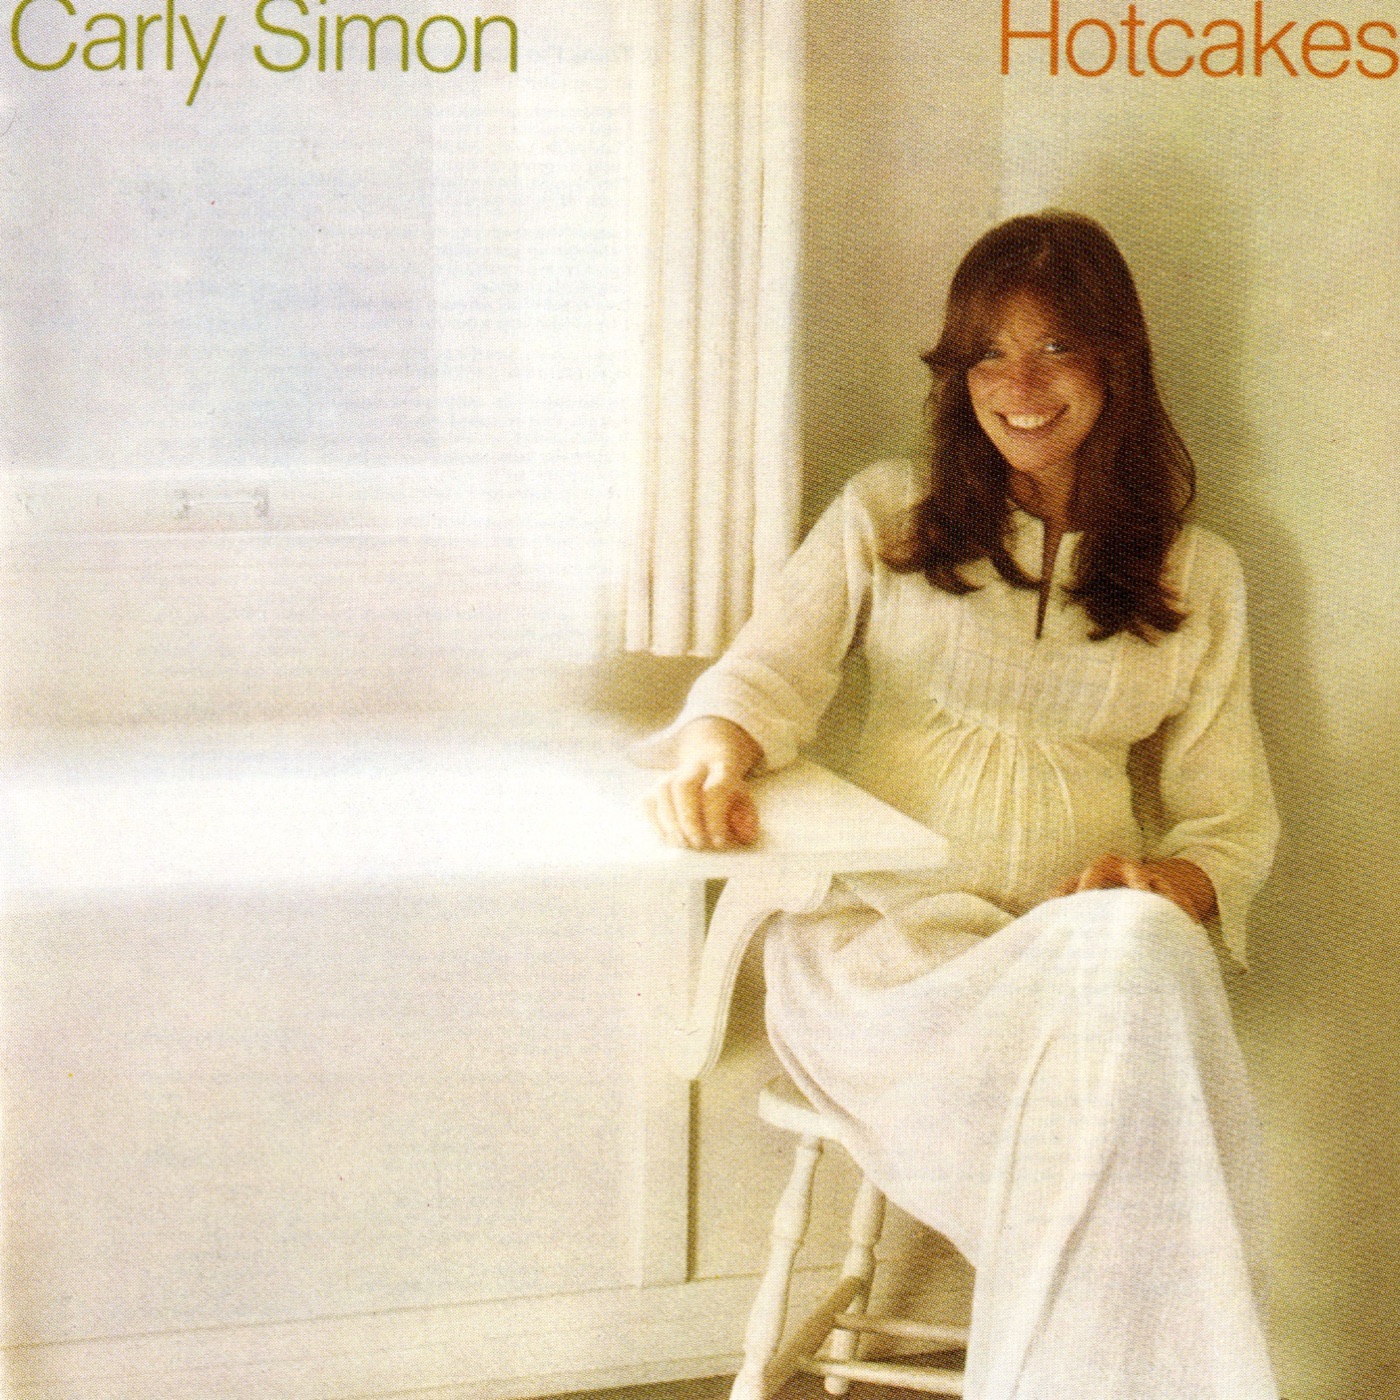 Hotcakes by Carly Simon